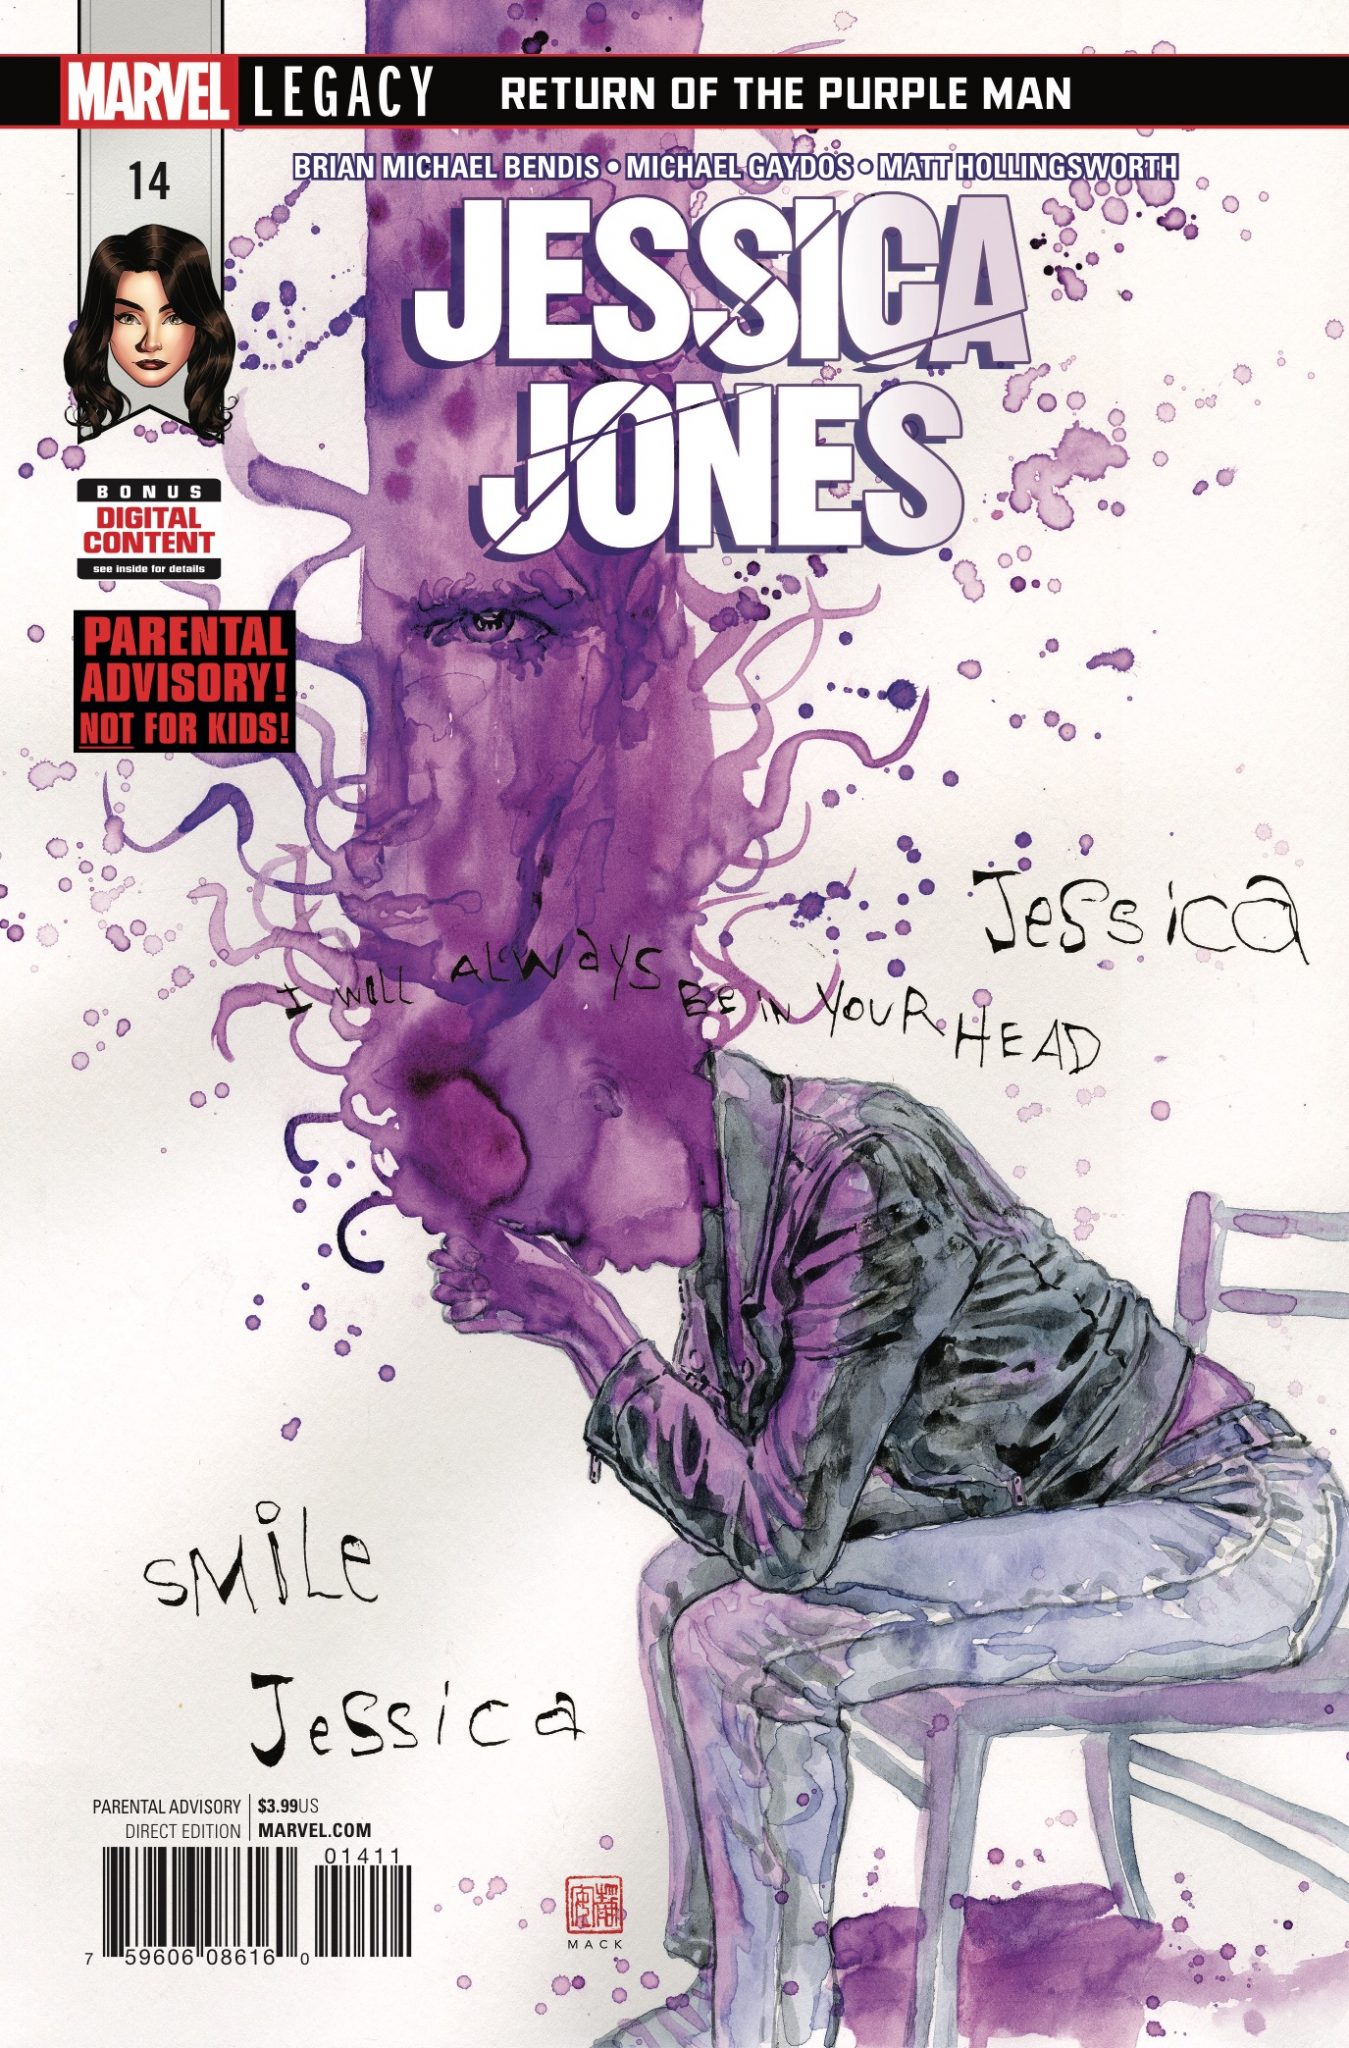 Jessica Jones #14 Review